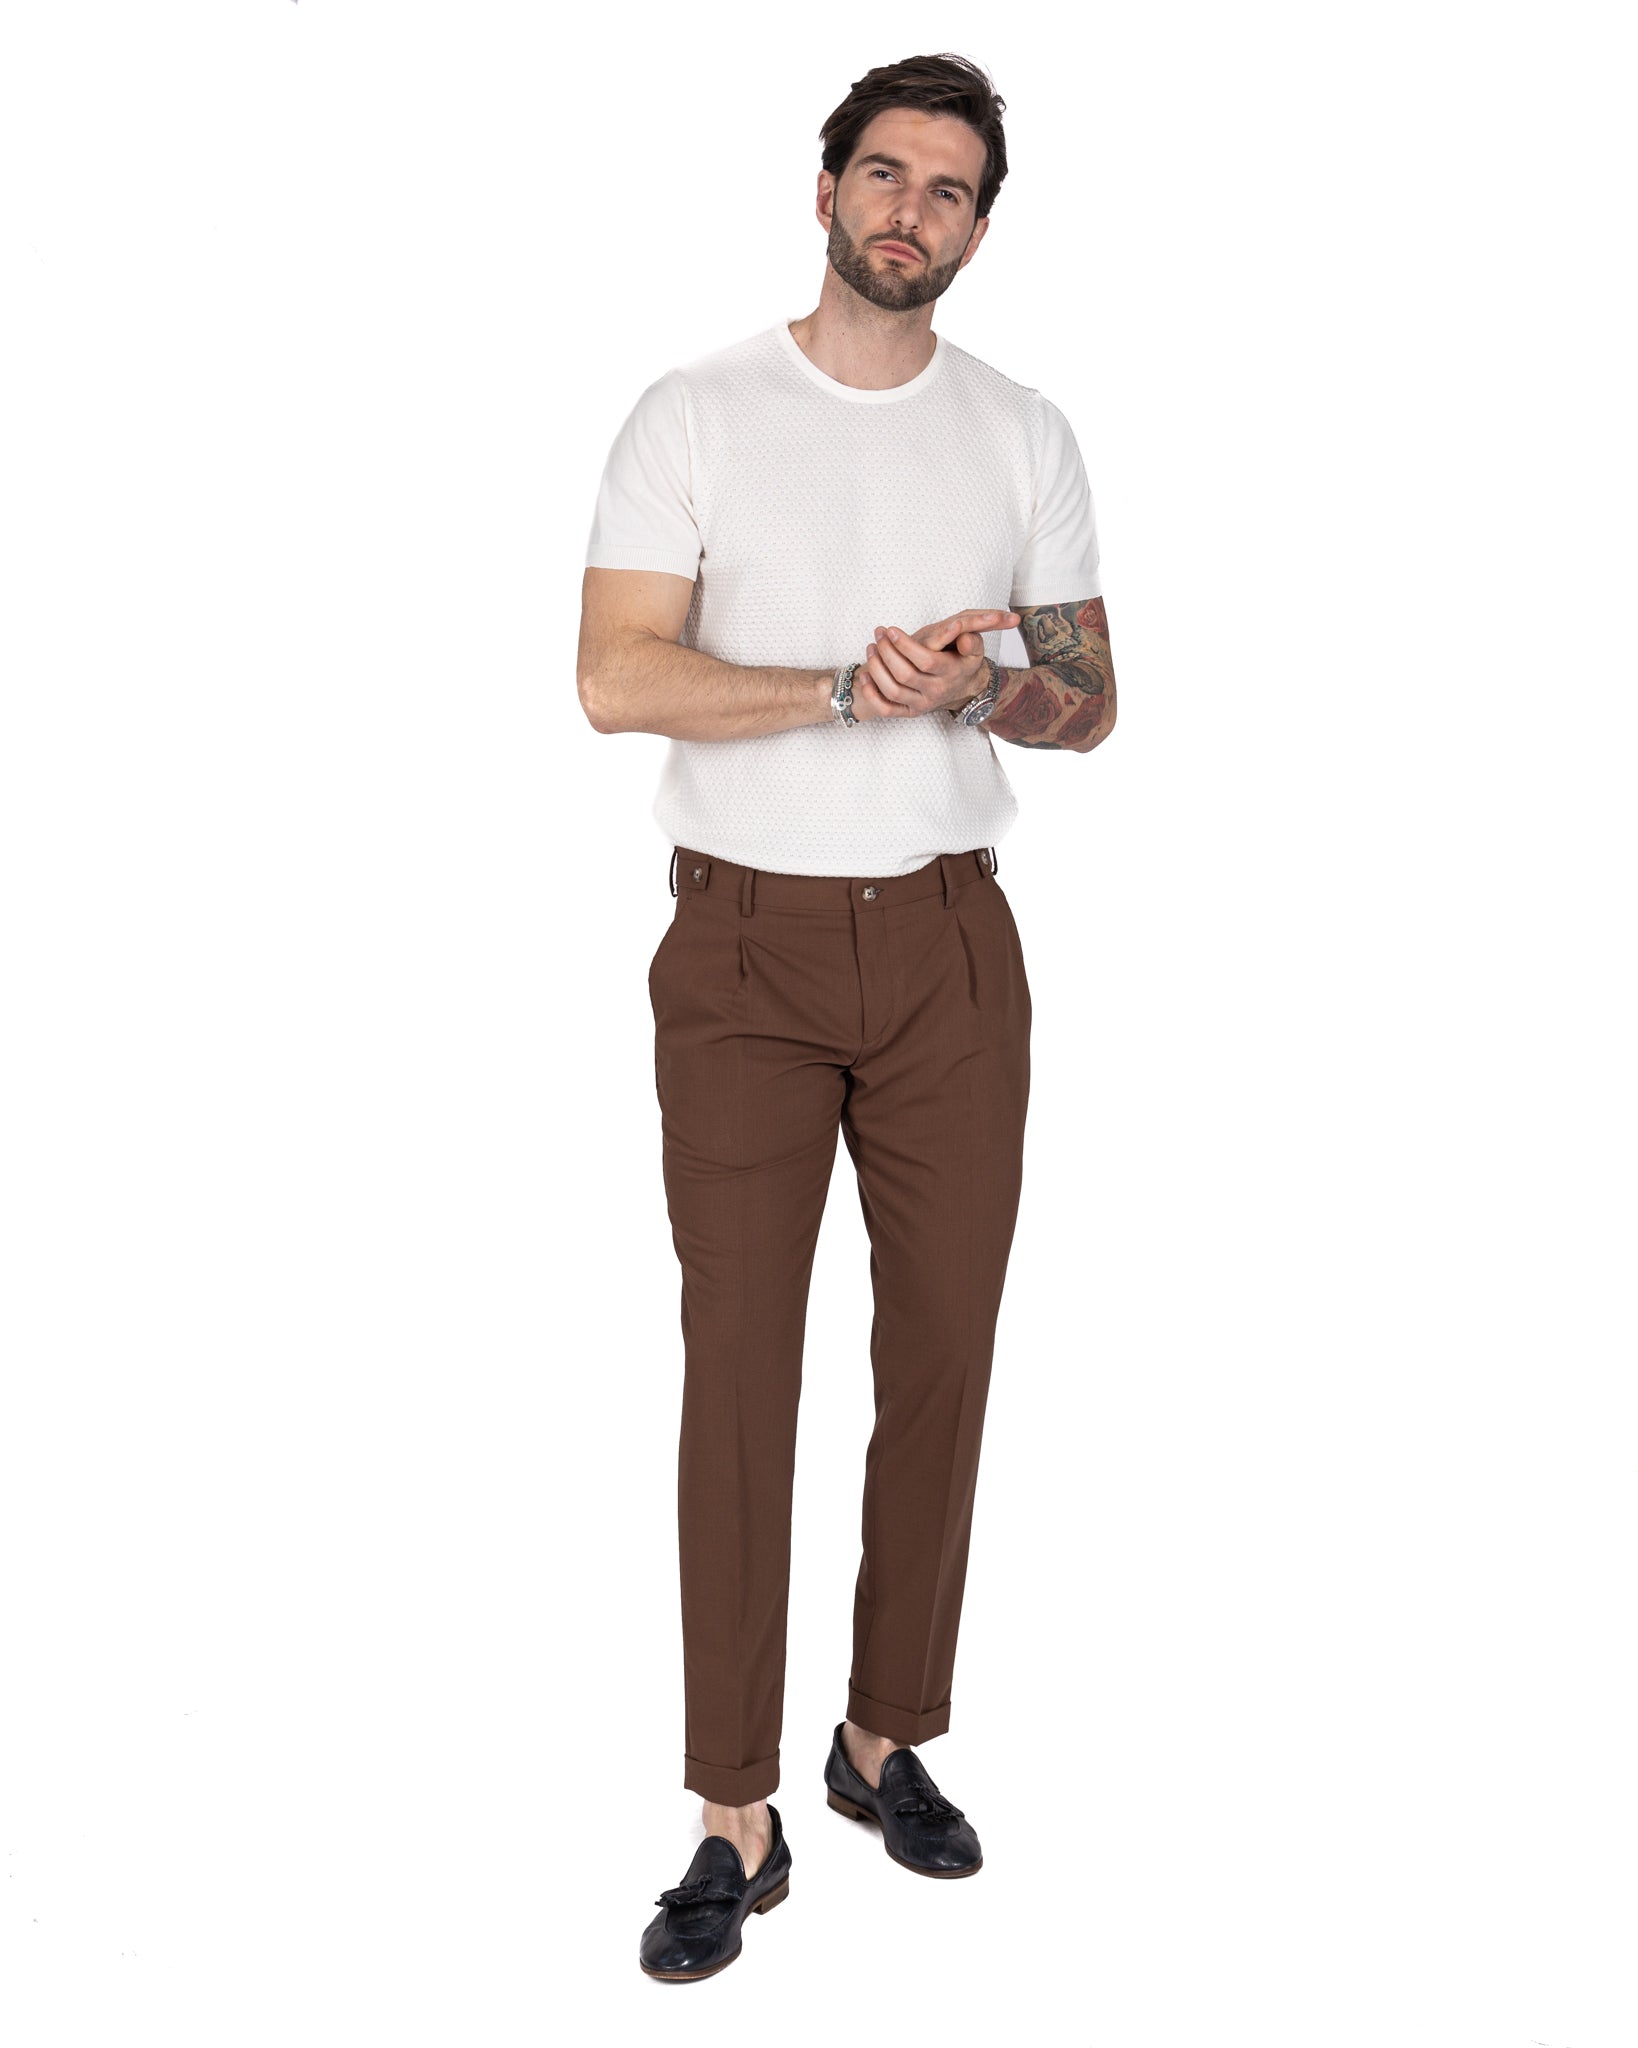 Milano - dark brown basic trousers